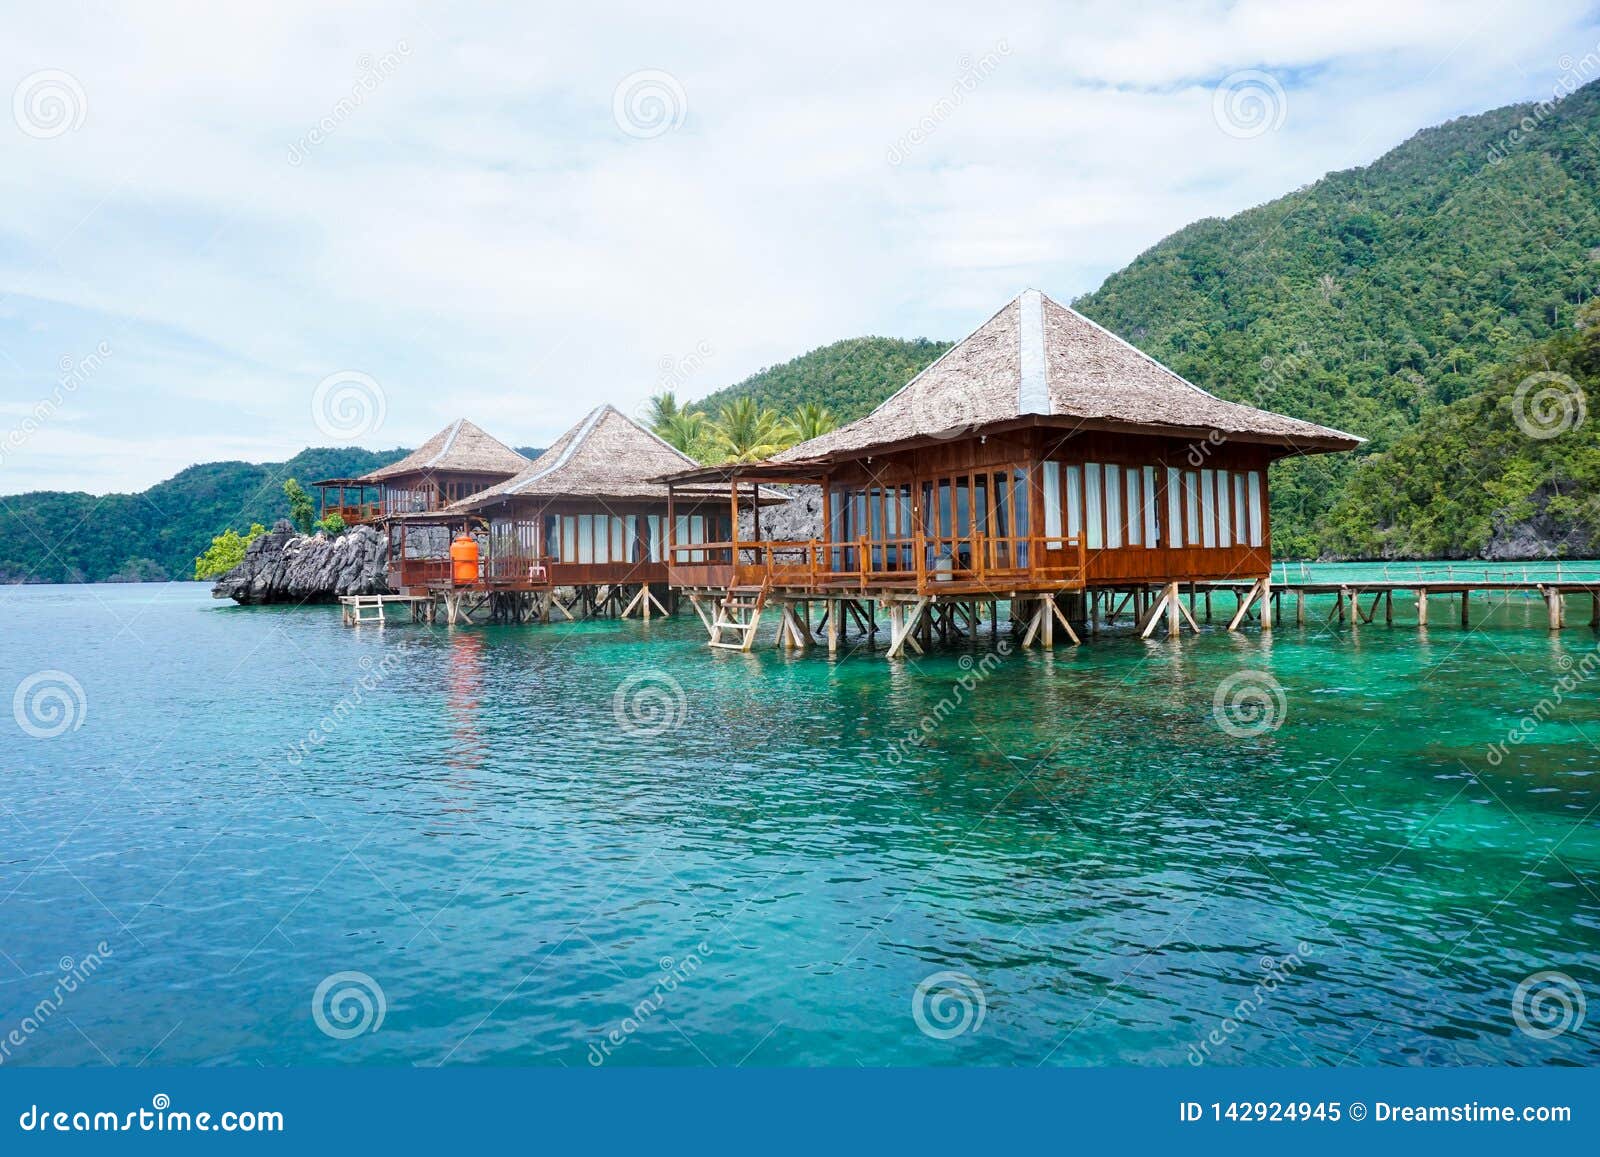 Nirwana Resort Labengki Island Indonesia Stock Image - Image of blue